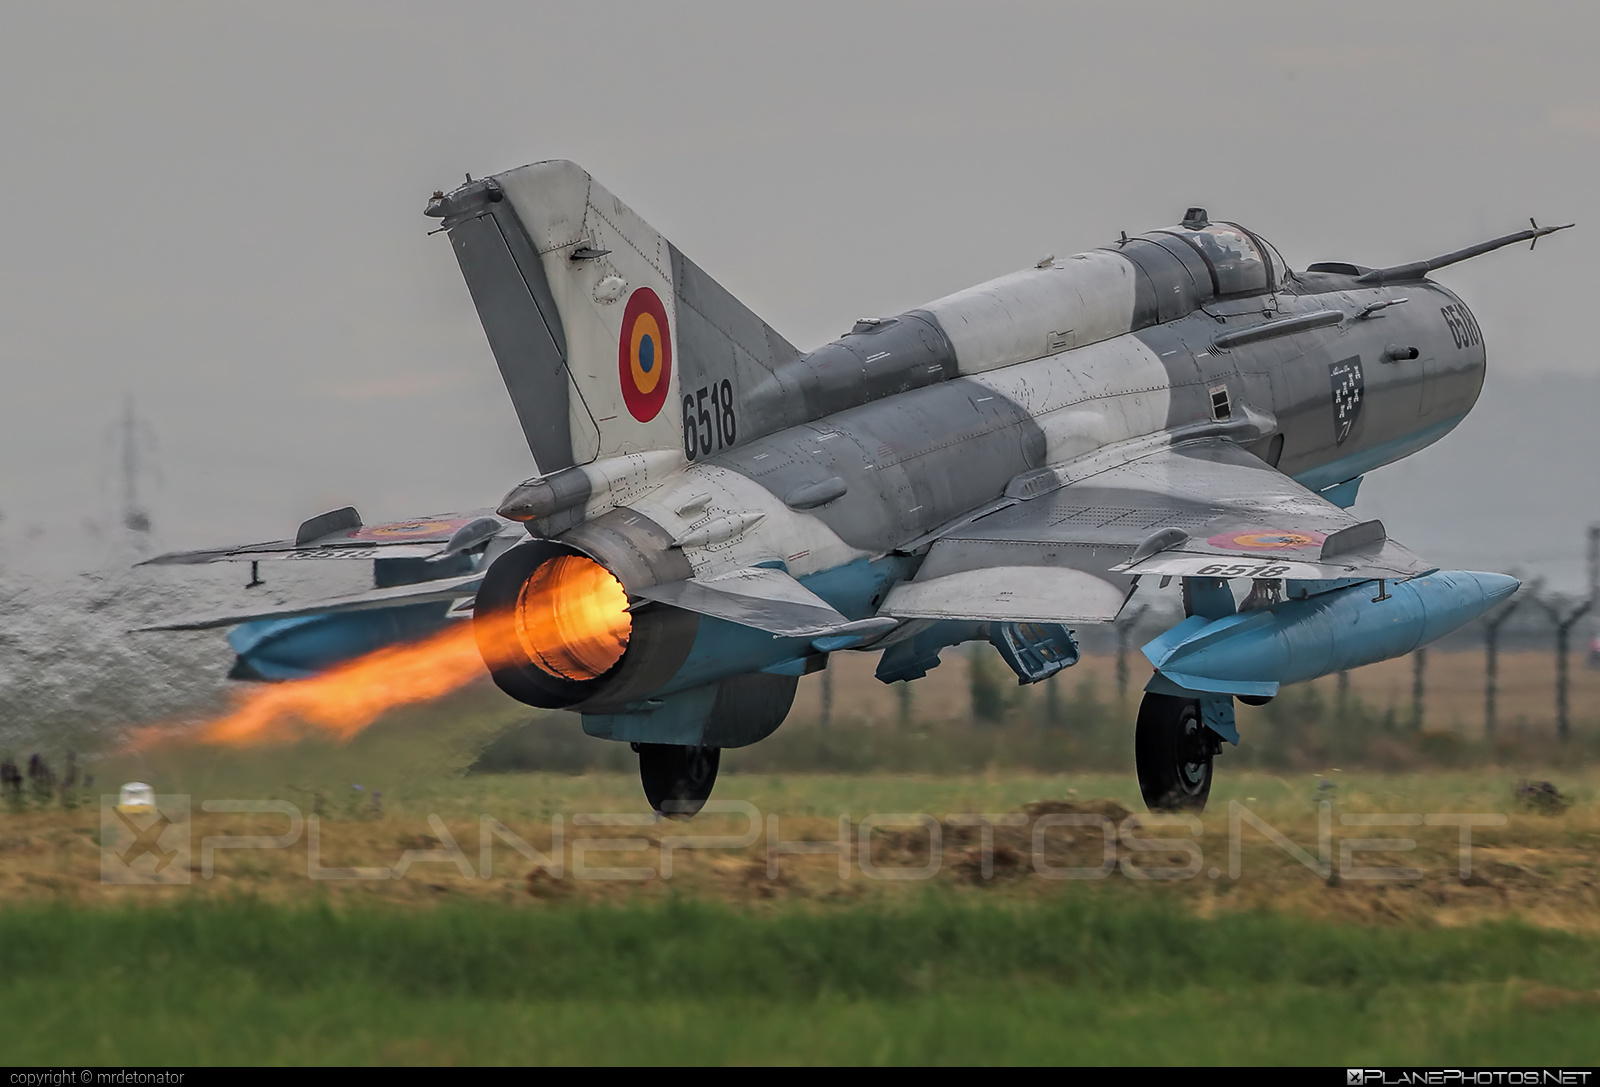 Mikoyan-Gurevich MiG-21MF - 6518 operated by Forţele Aeriene Române (Romanian Air Force) #forteleaerieneromane #mig #mig21 #mig21mf #mikoyangurevich #romanianairforce